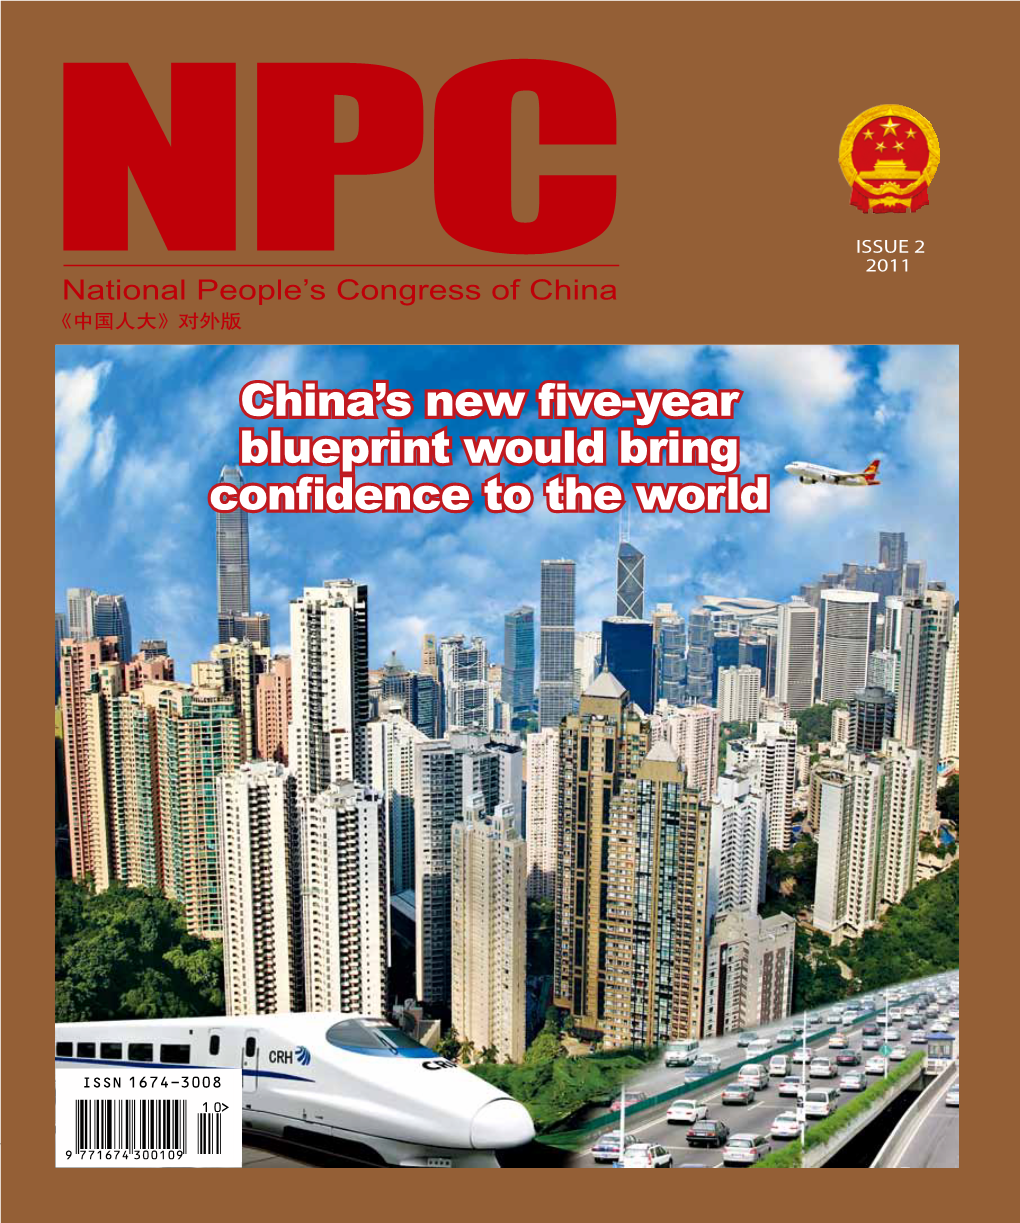 ISSUE 2 2011 Npcnational People’S Congress of China 《中国人大》对外版